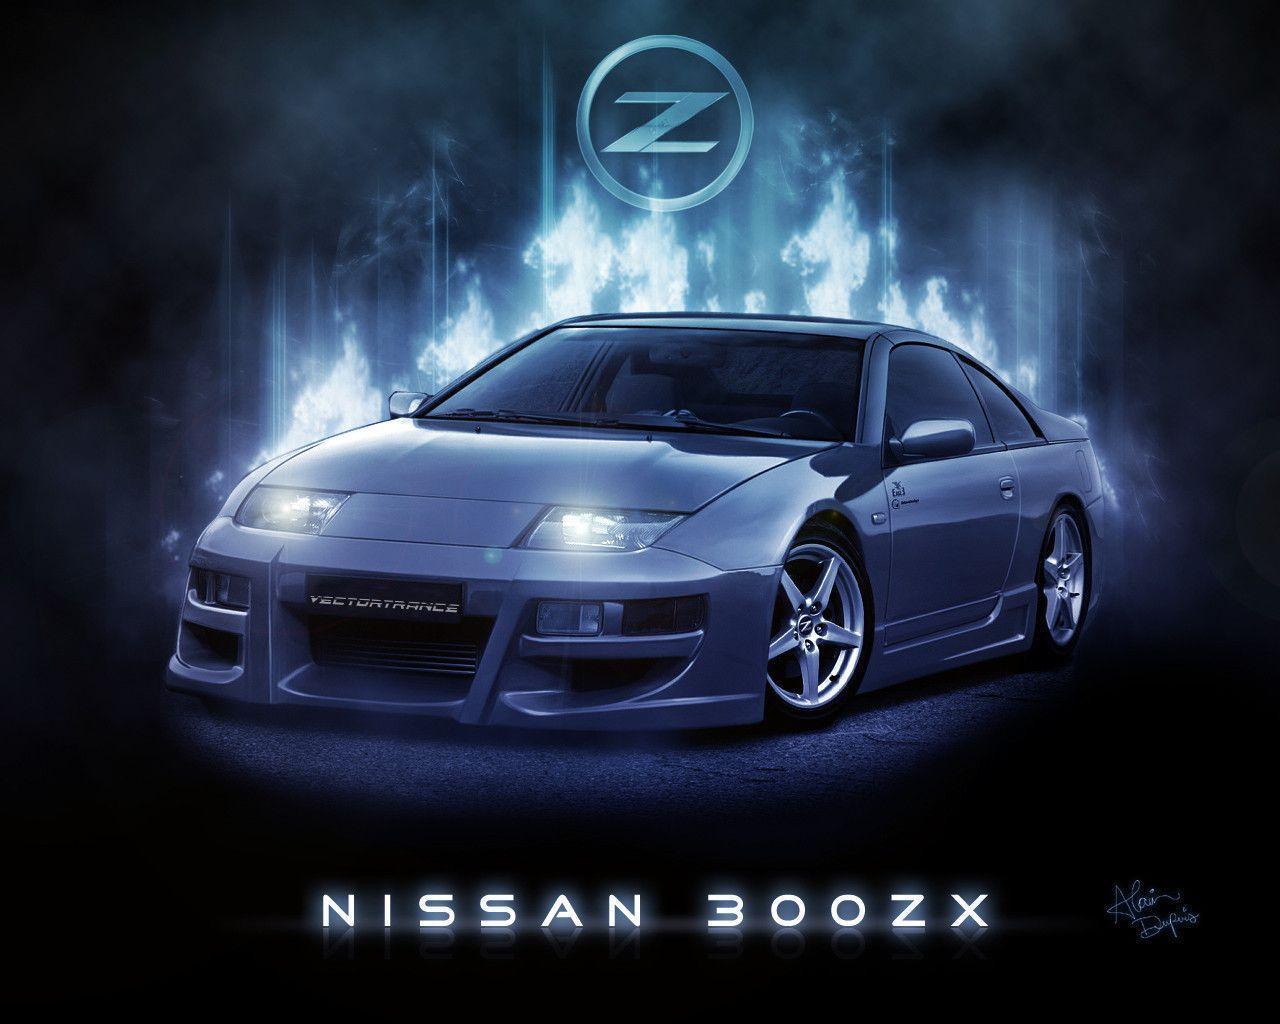 Nissan 300zx